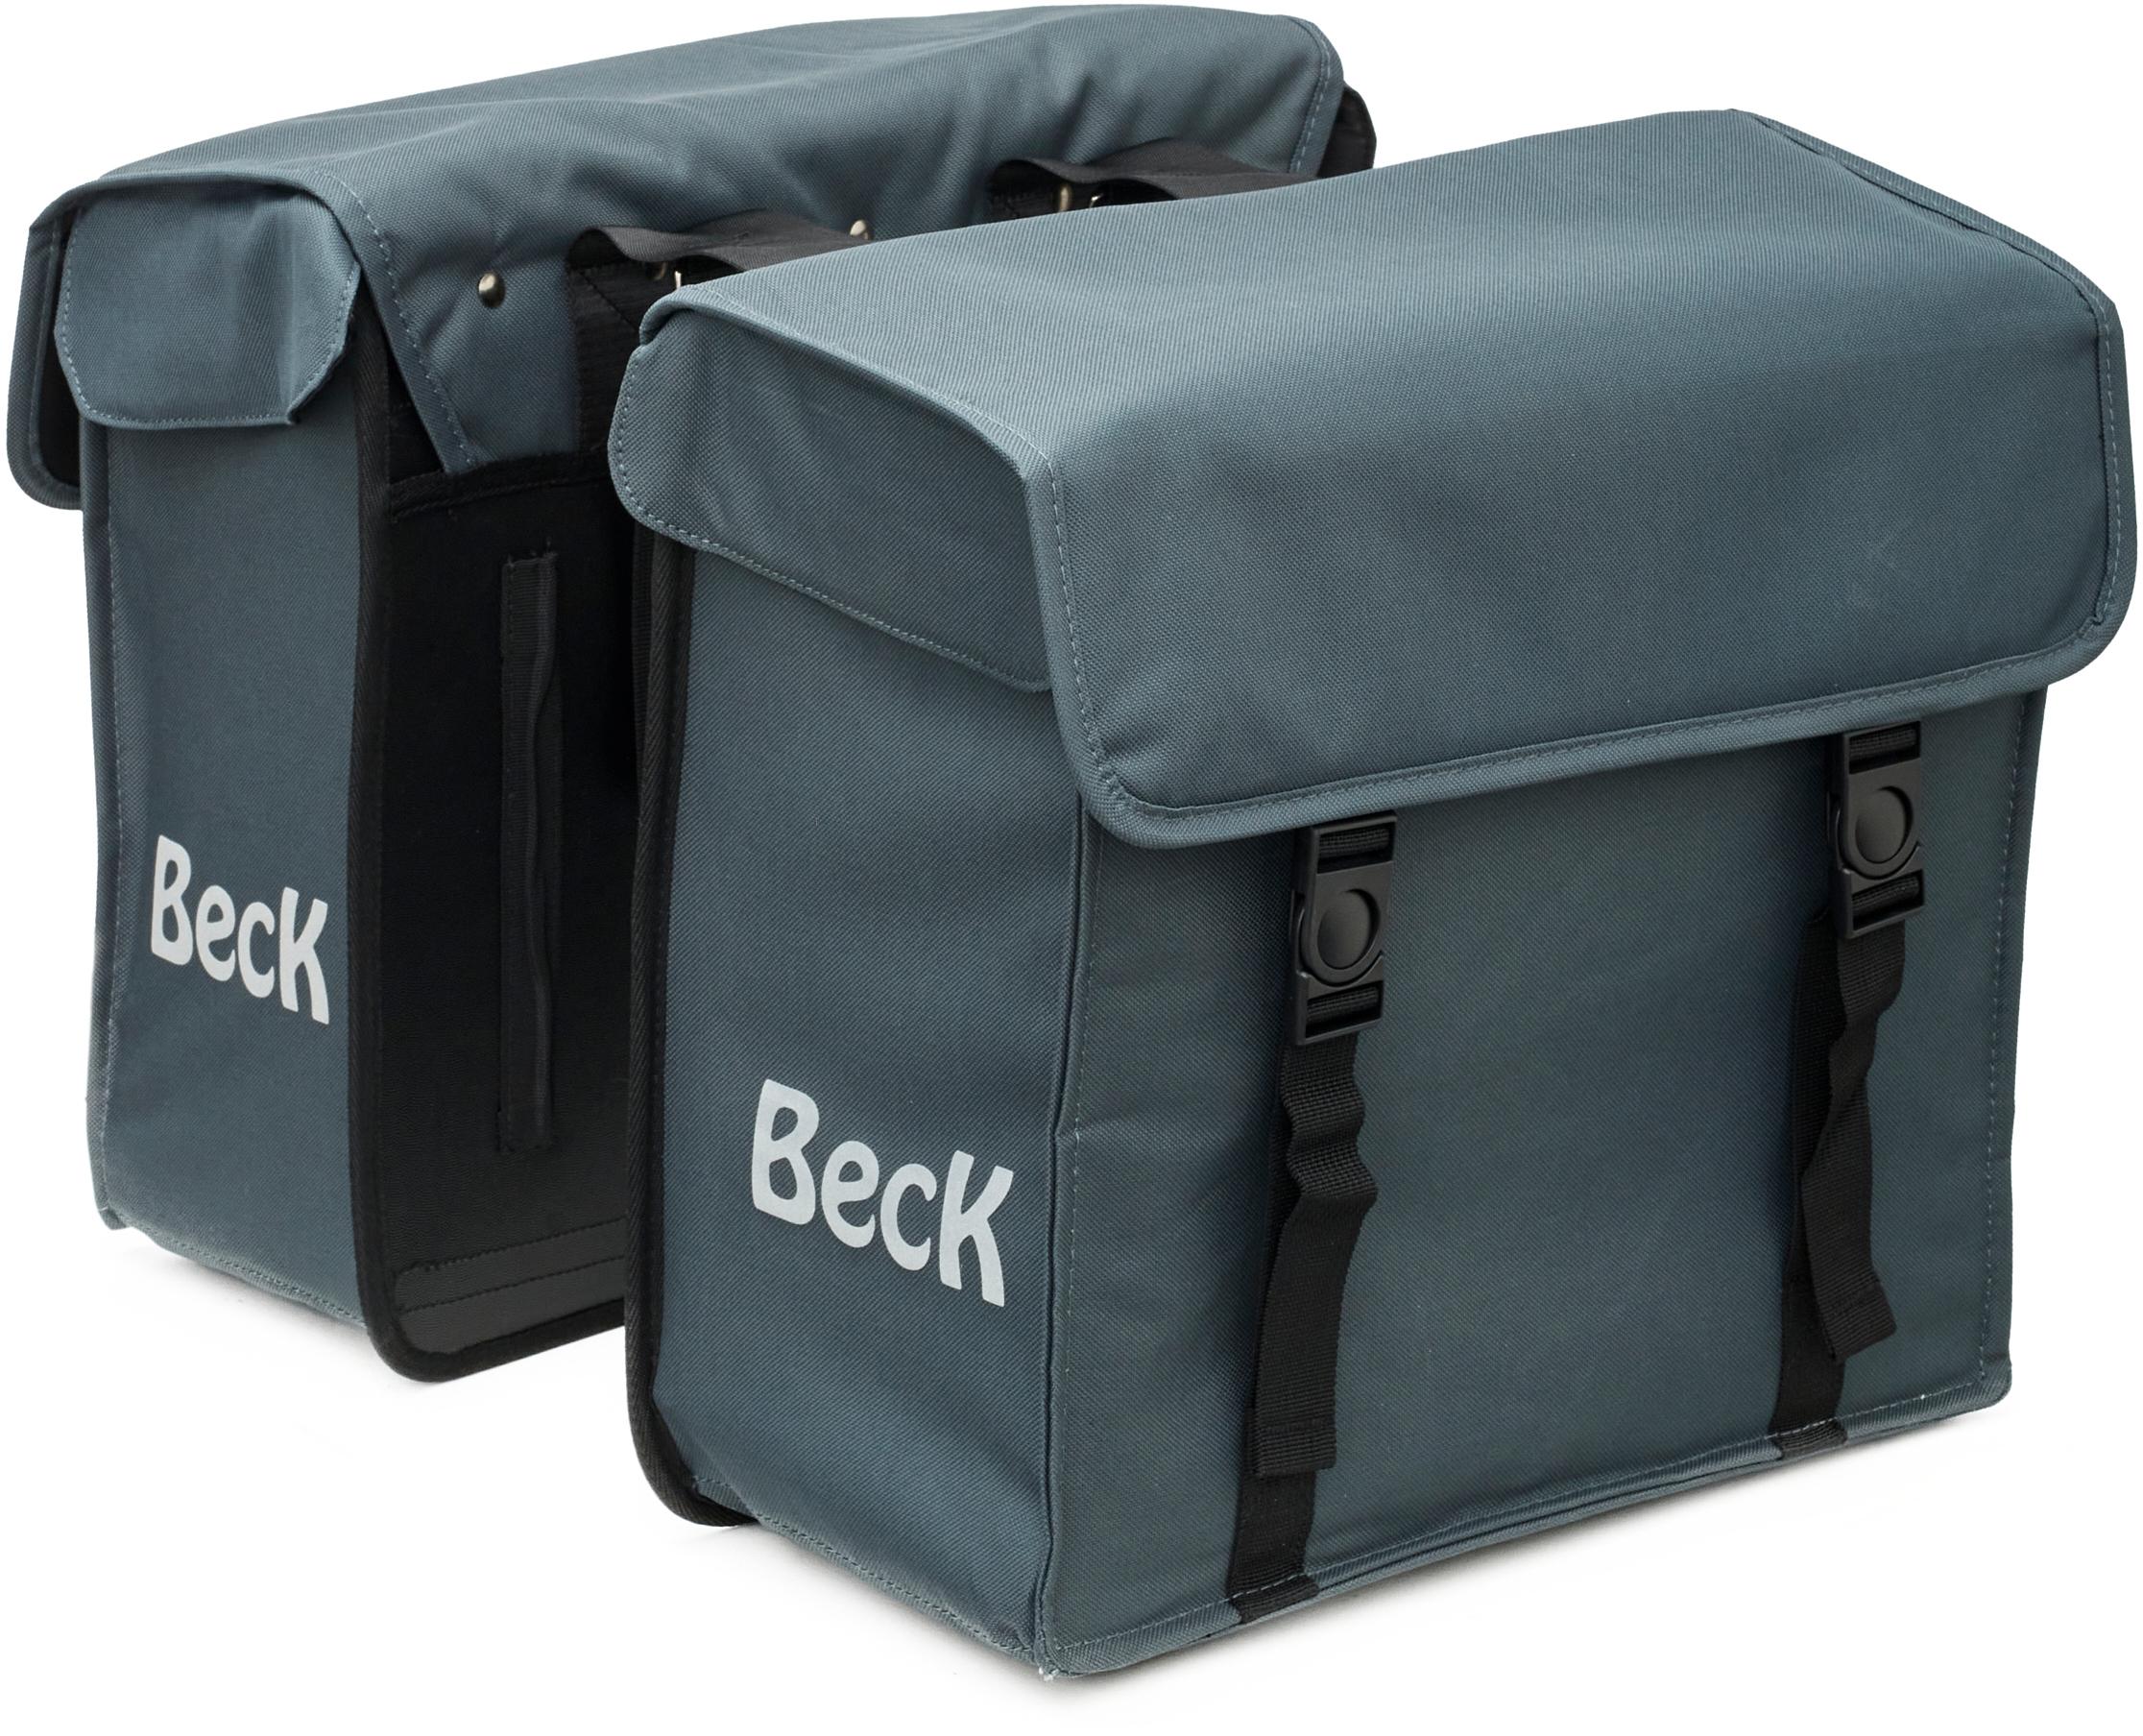 Beck Canvas Double Pannier Bag Grey